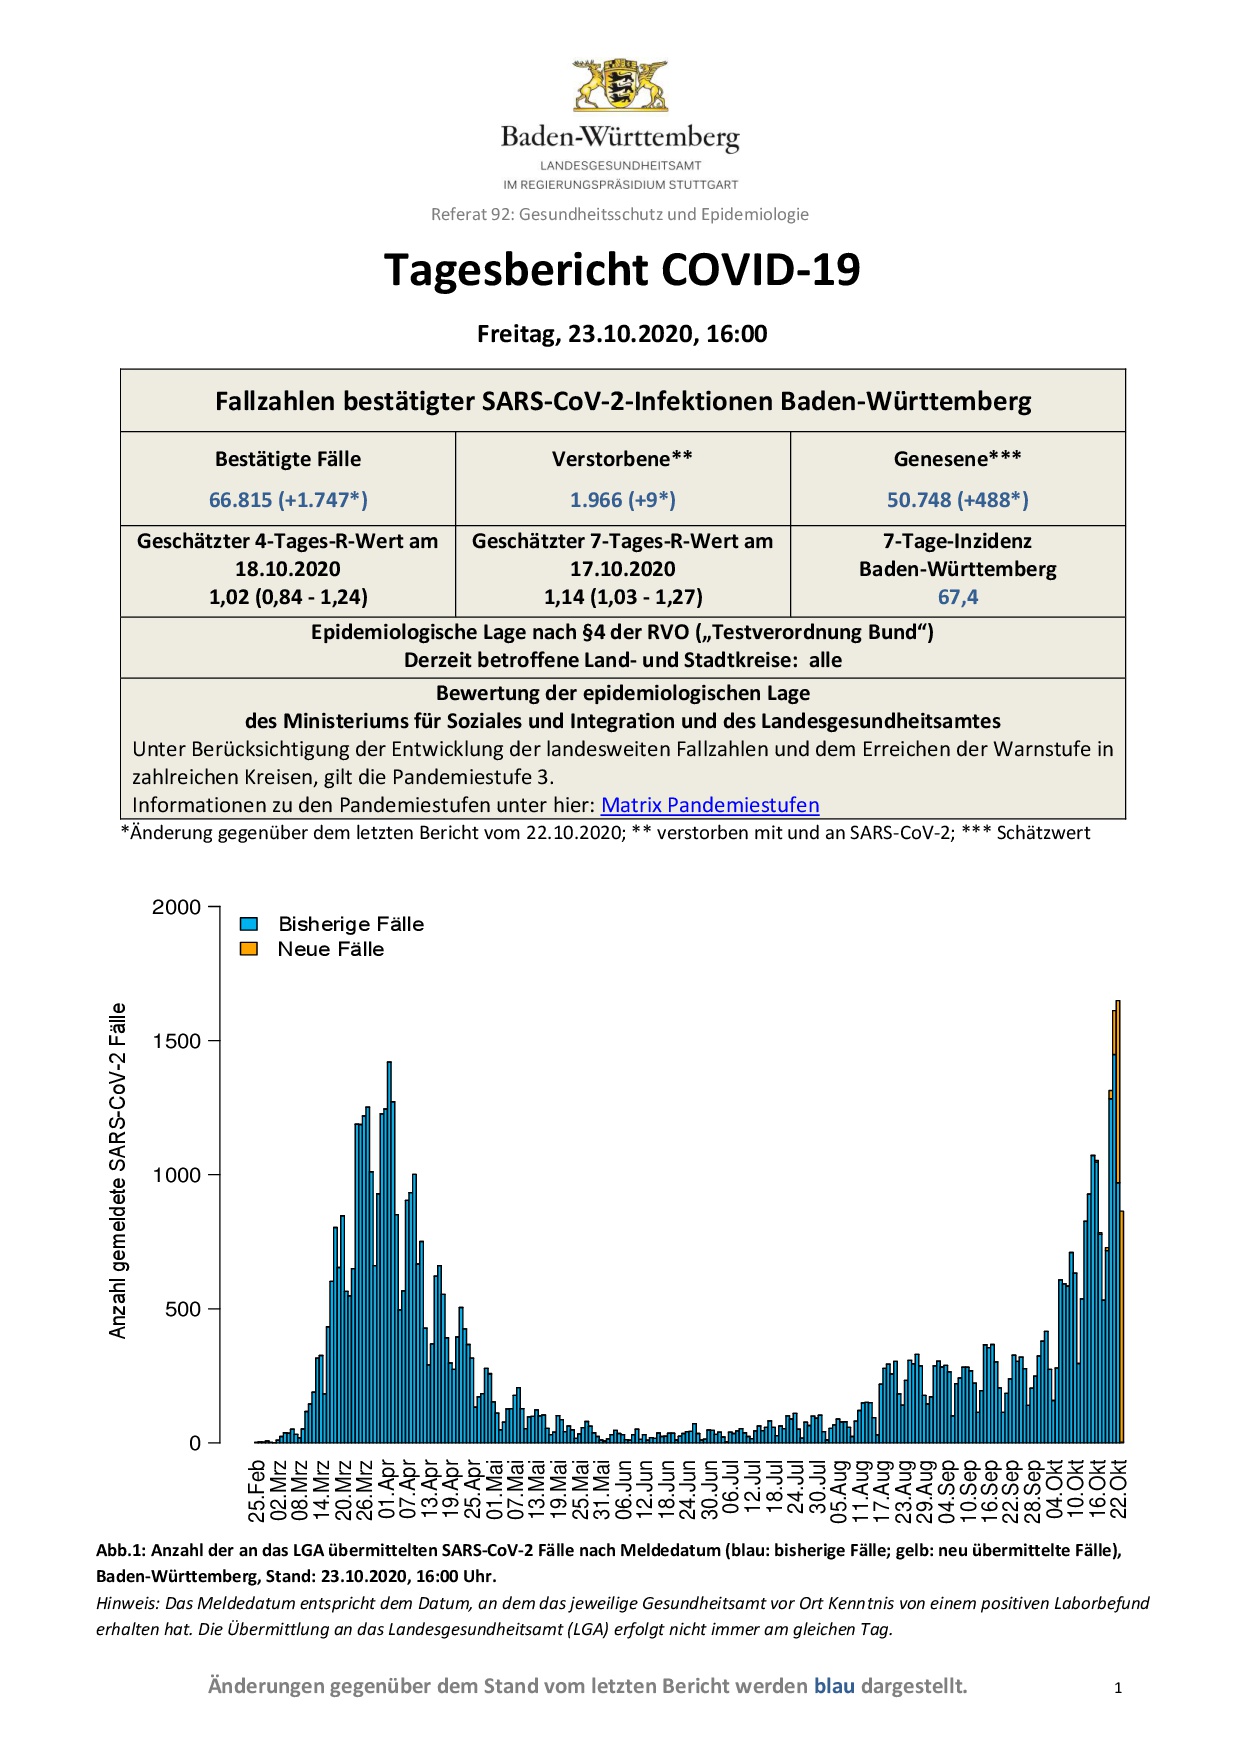 COVID-19 Tagesbericht (23.10.2020) des Landesgesundheitsamts Baden-Württemberg